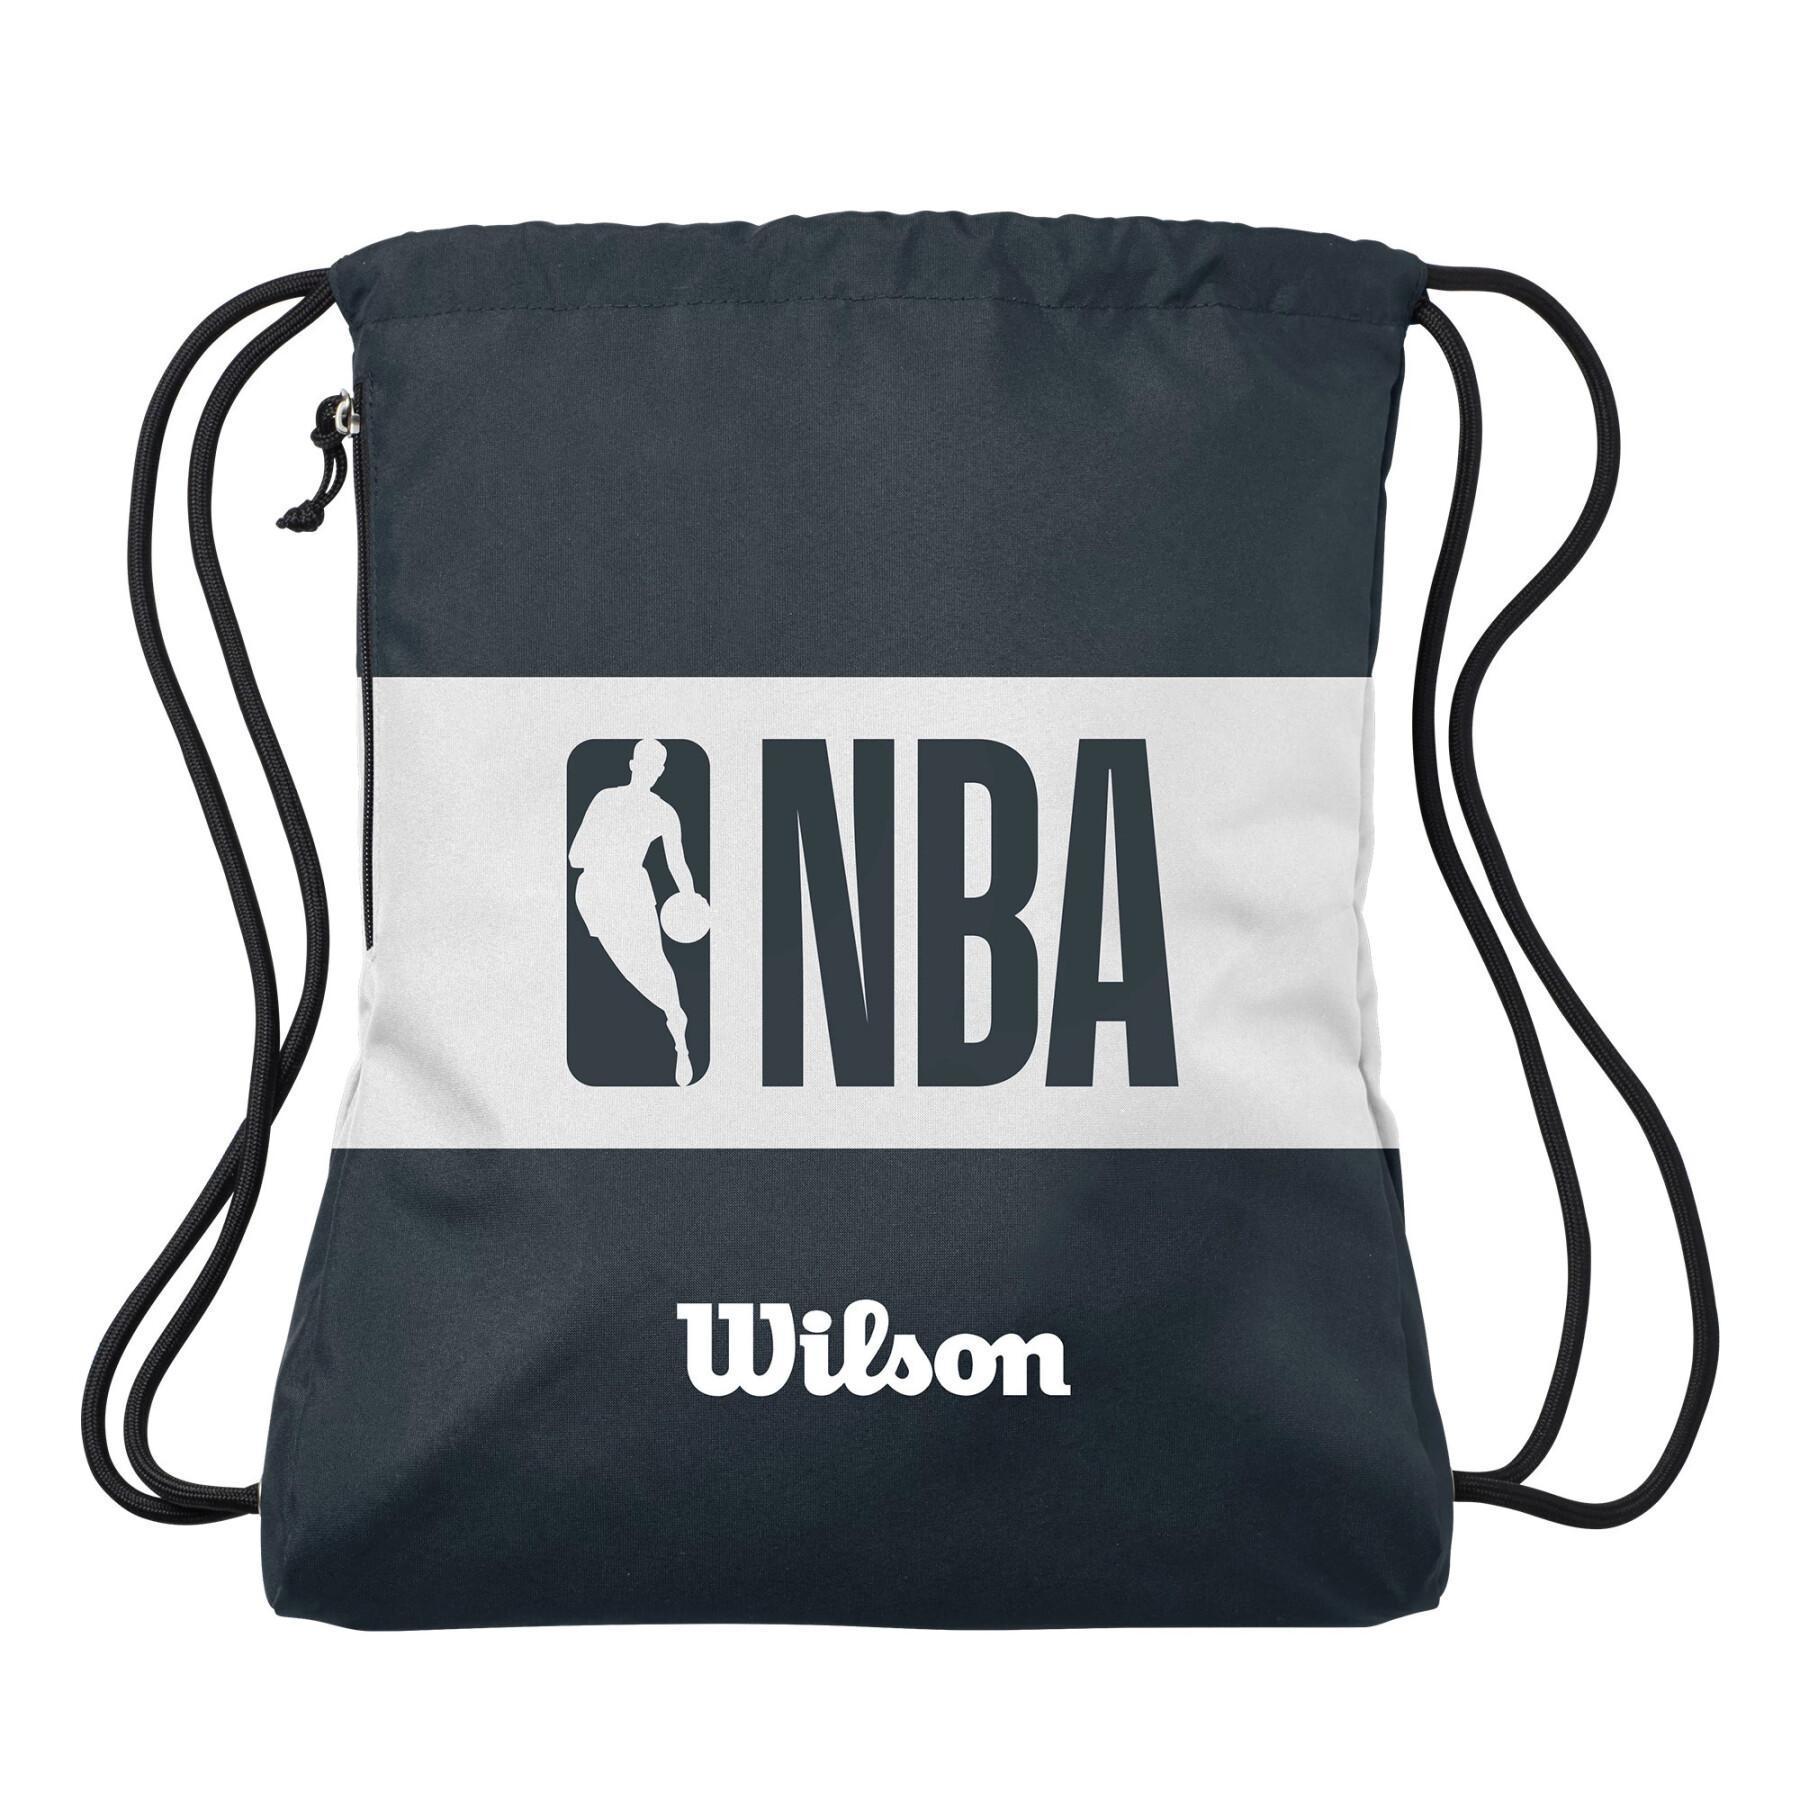 Schnursack Wilson NBA